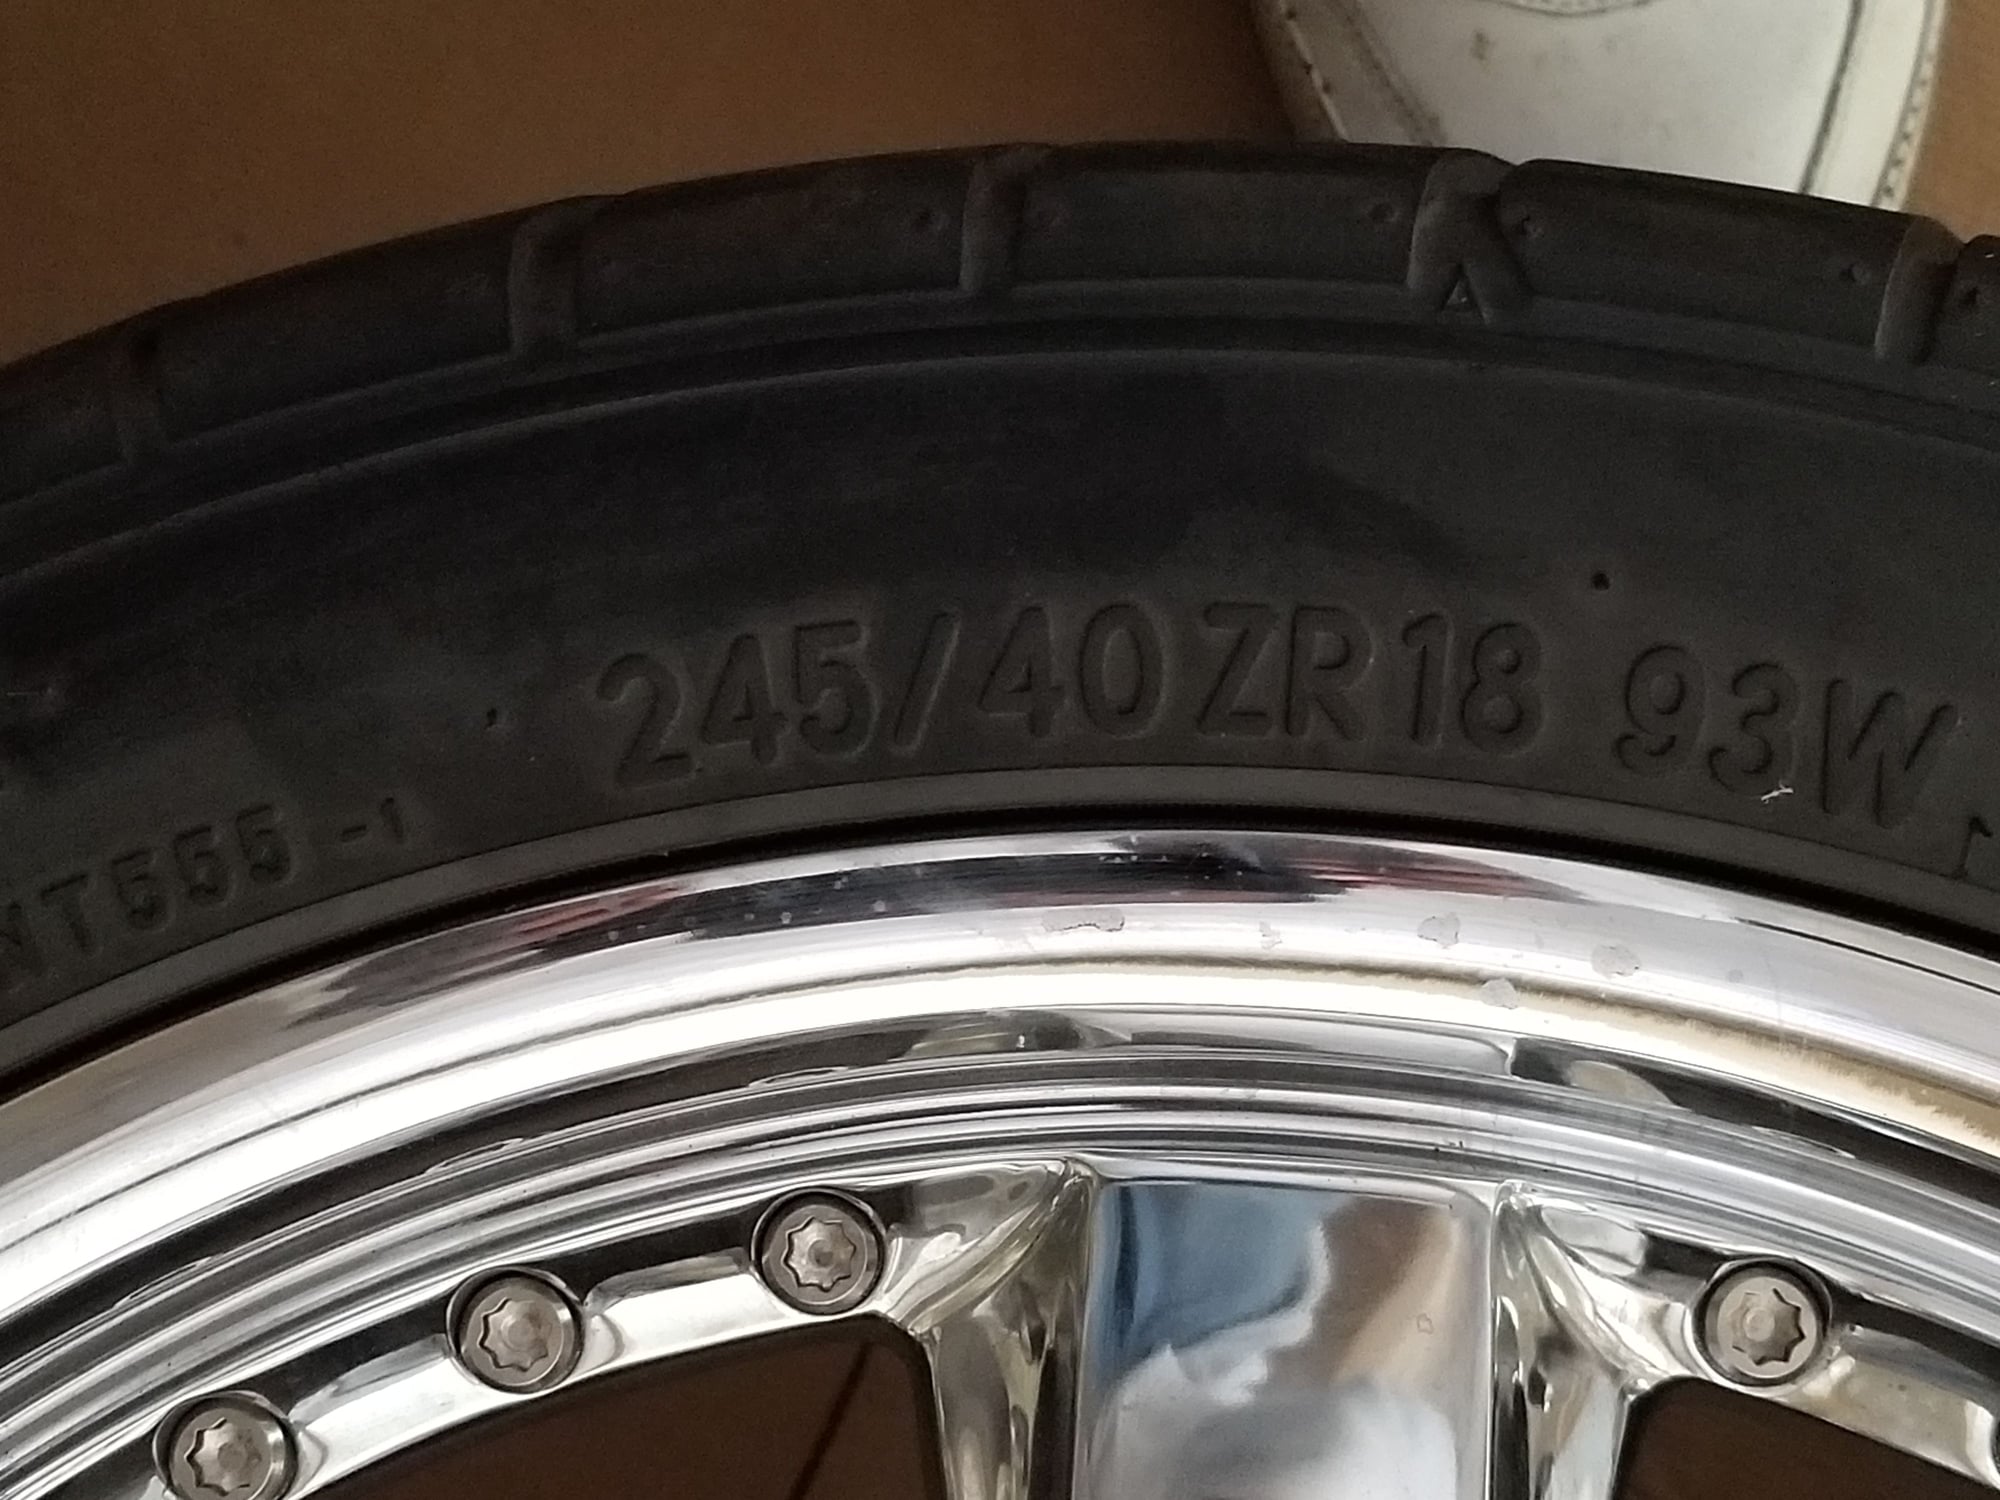  - TSW Jarama wheels and tires - Durham, NC 27712, United States